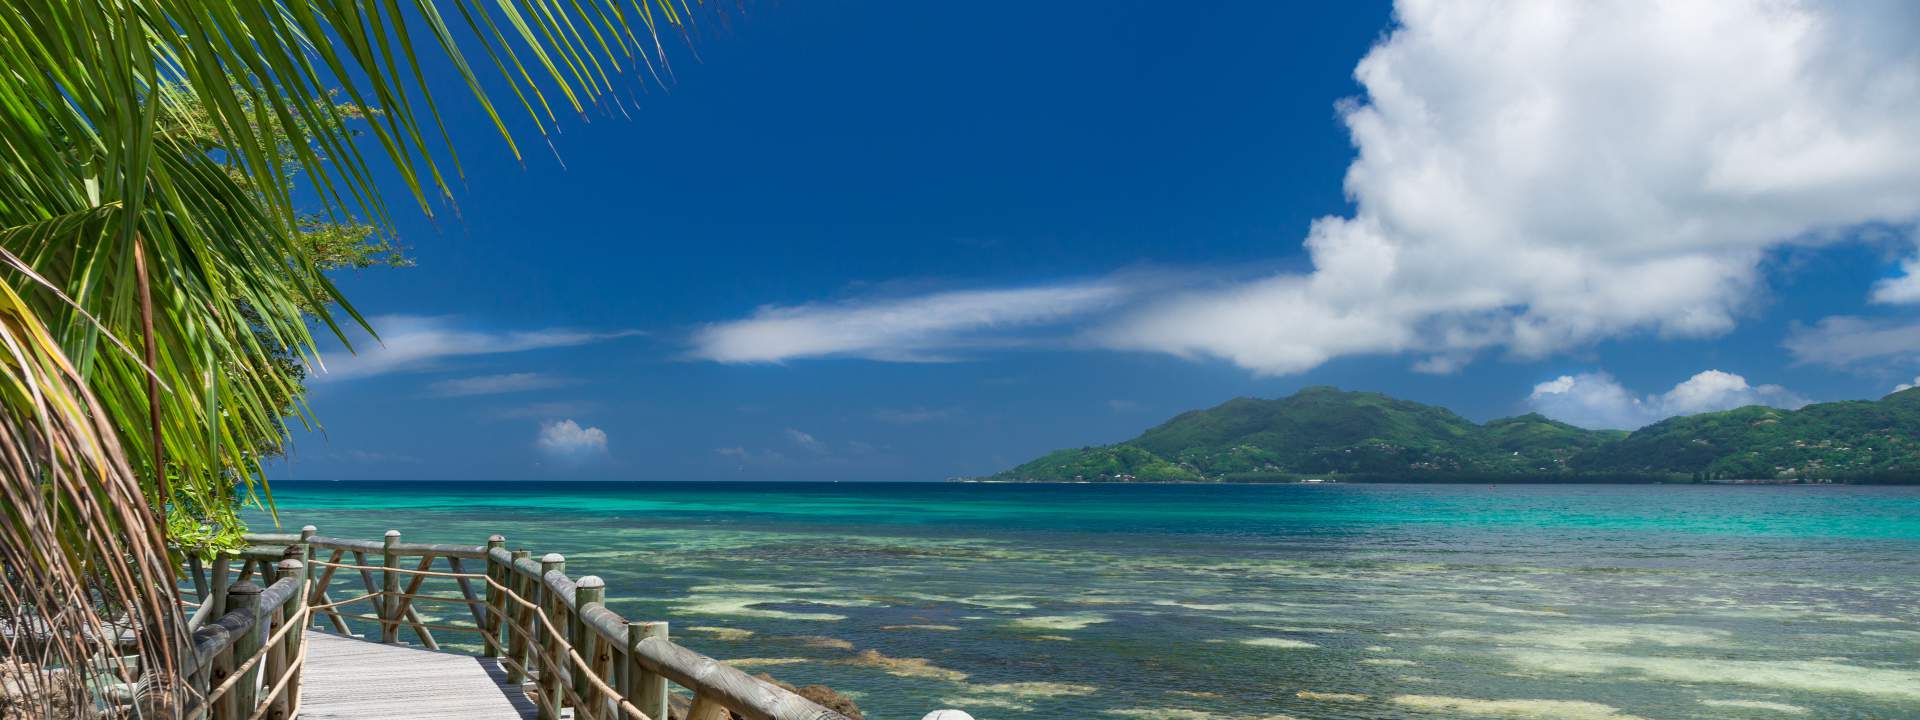 4 Day Cabin Cruise around the Seychelles